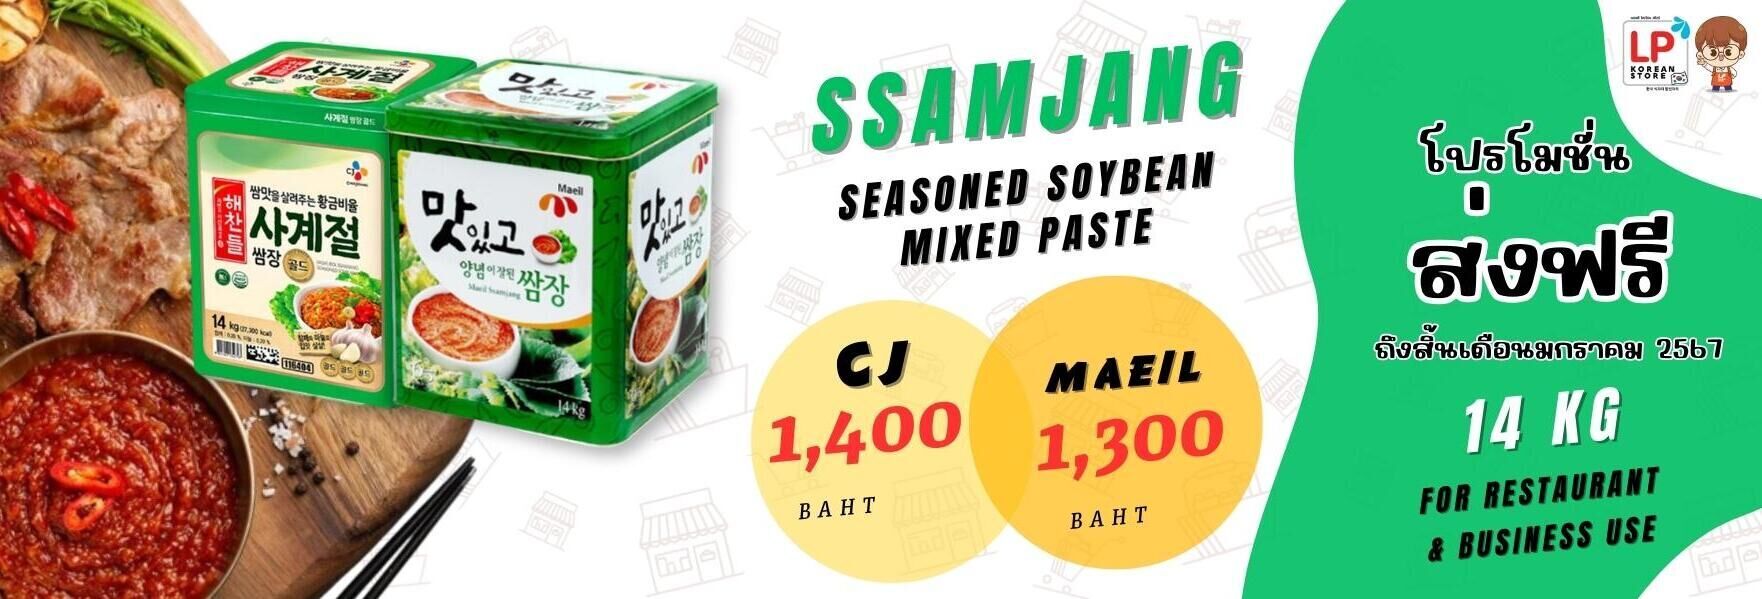 SSamjang Seasoned Soybean Mixed Paste